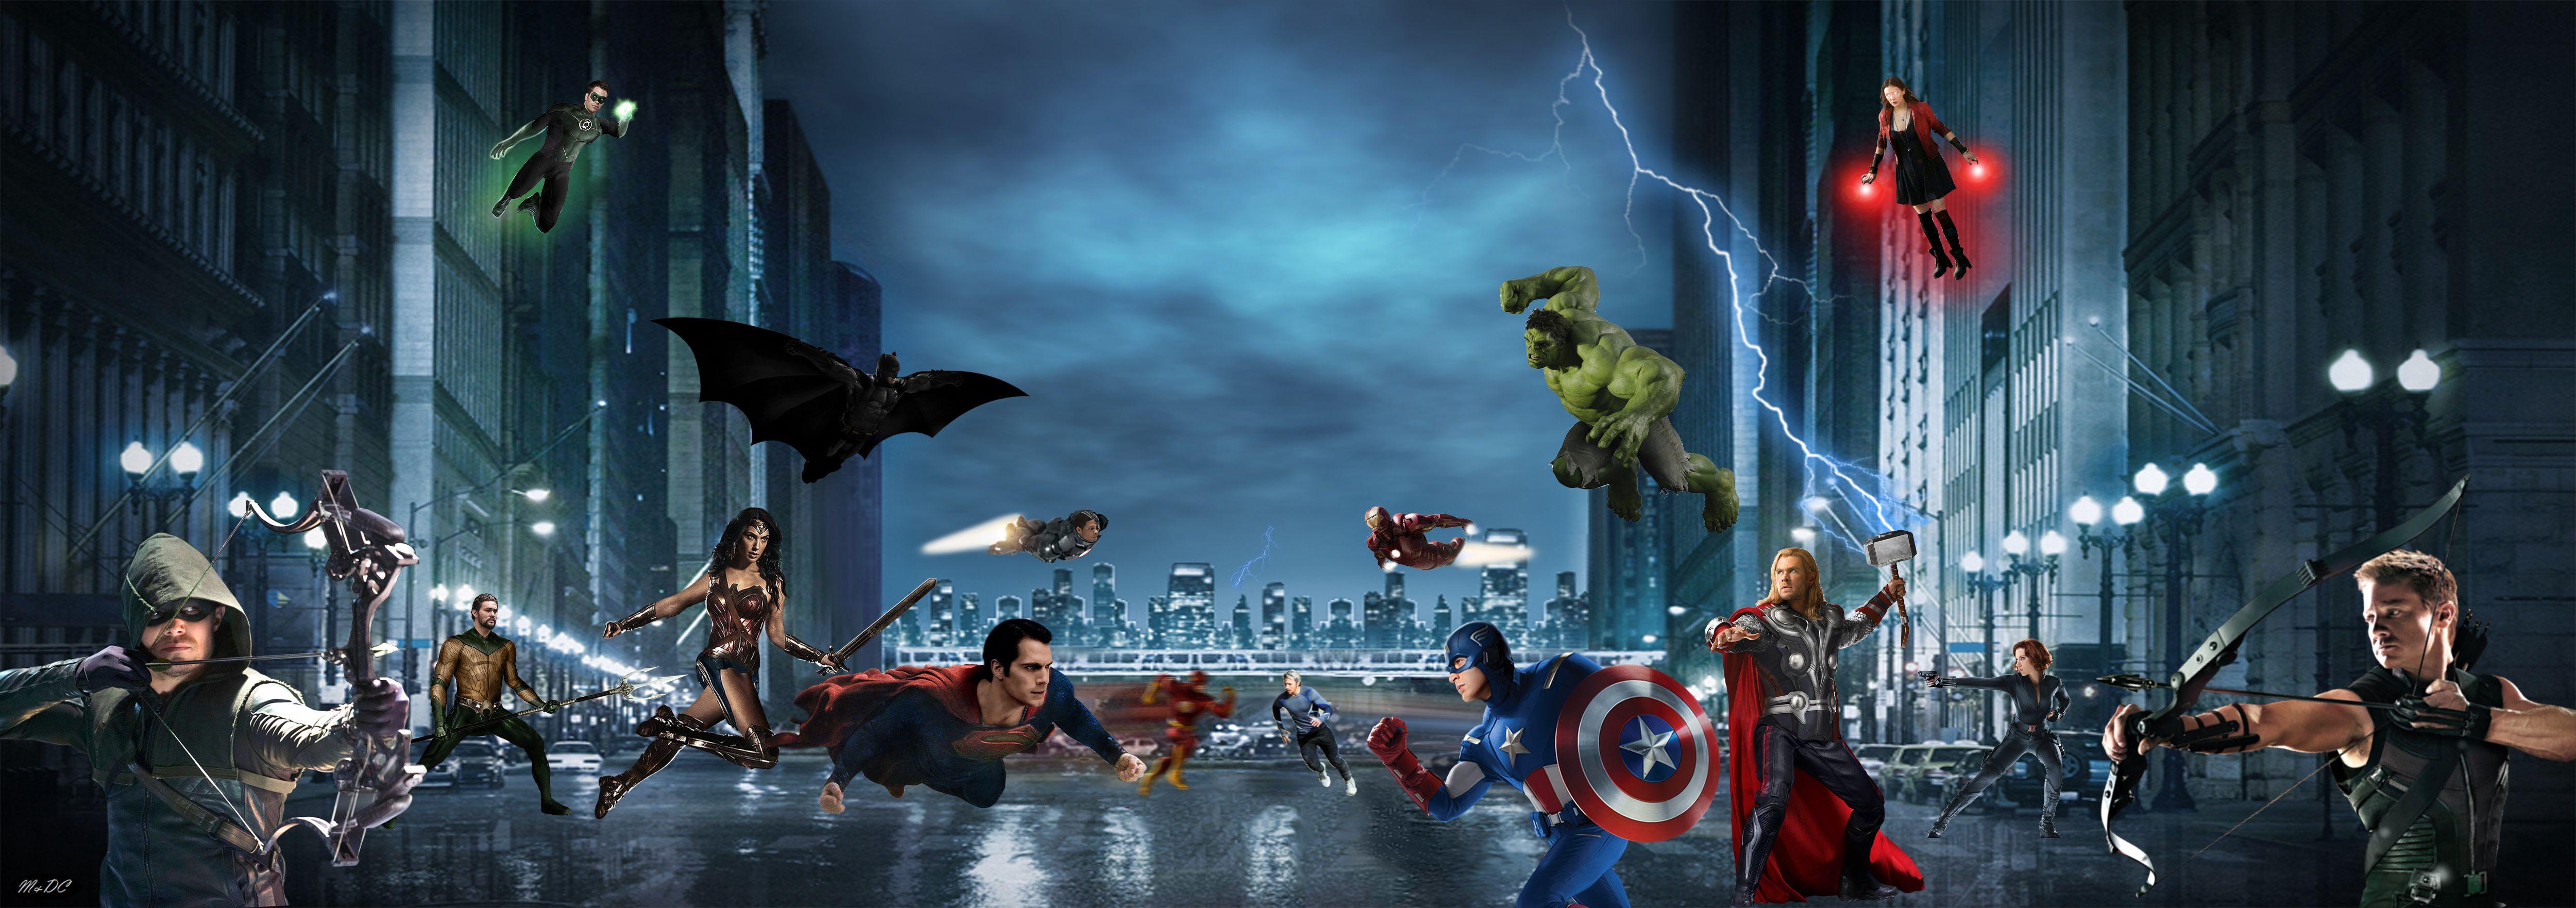 MARVEL vs. DC (aka The Avengers v. Justice League)